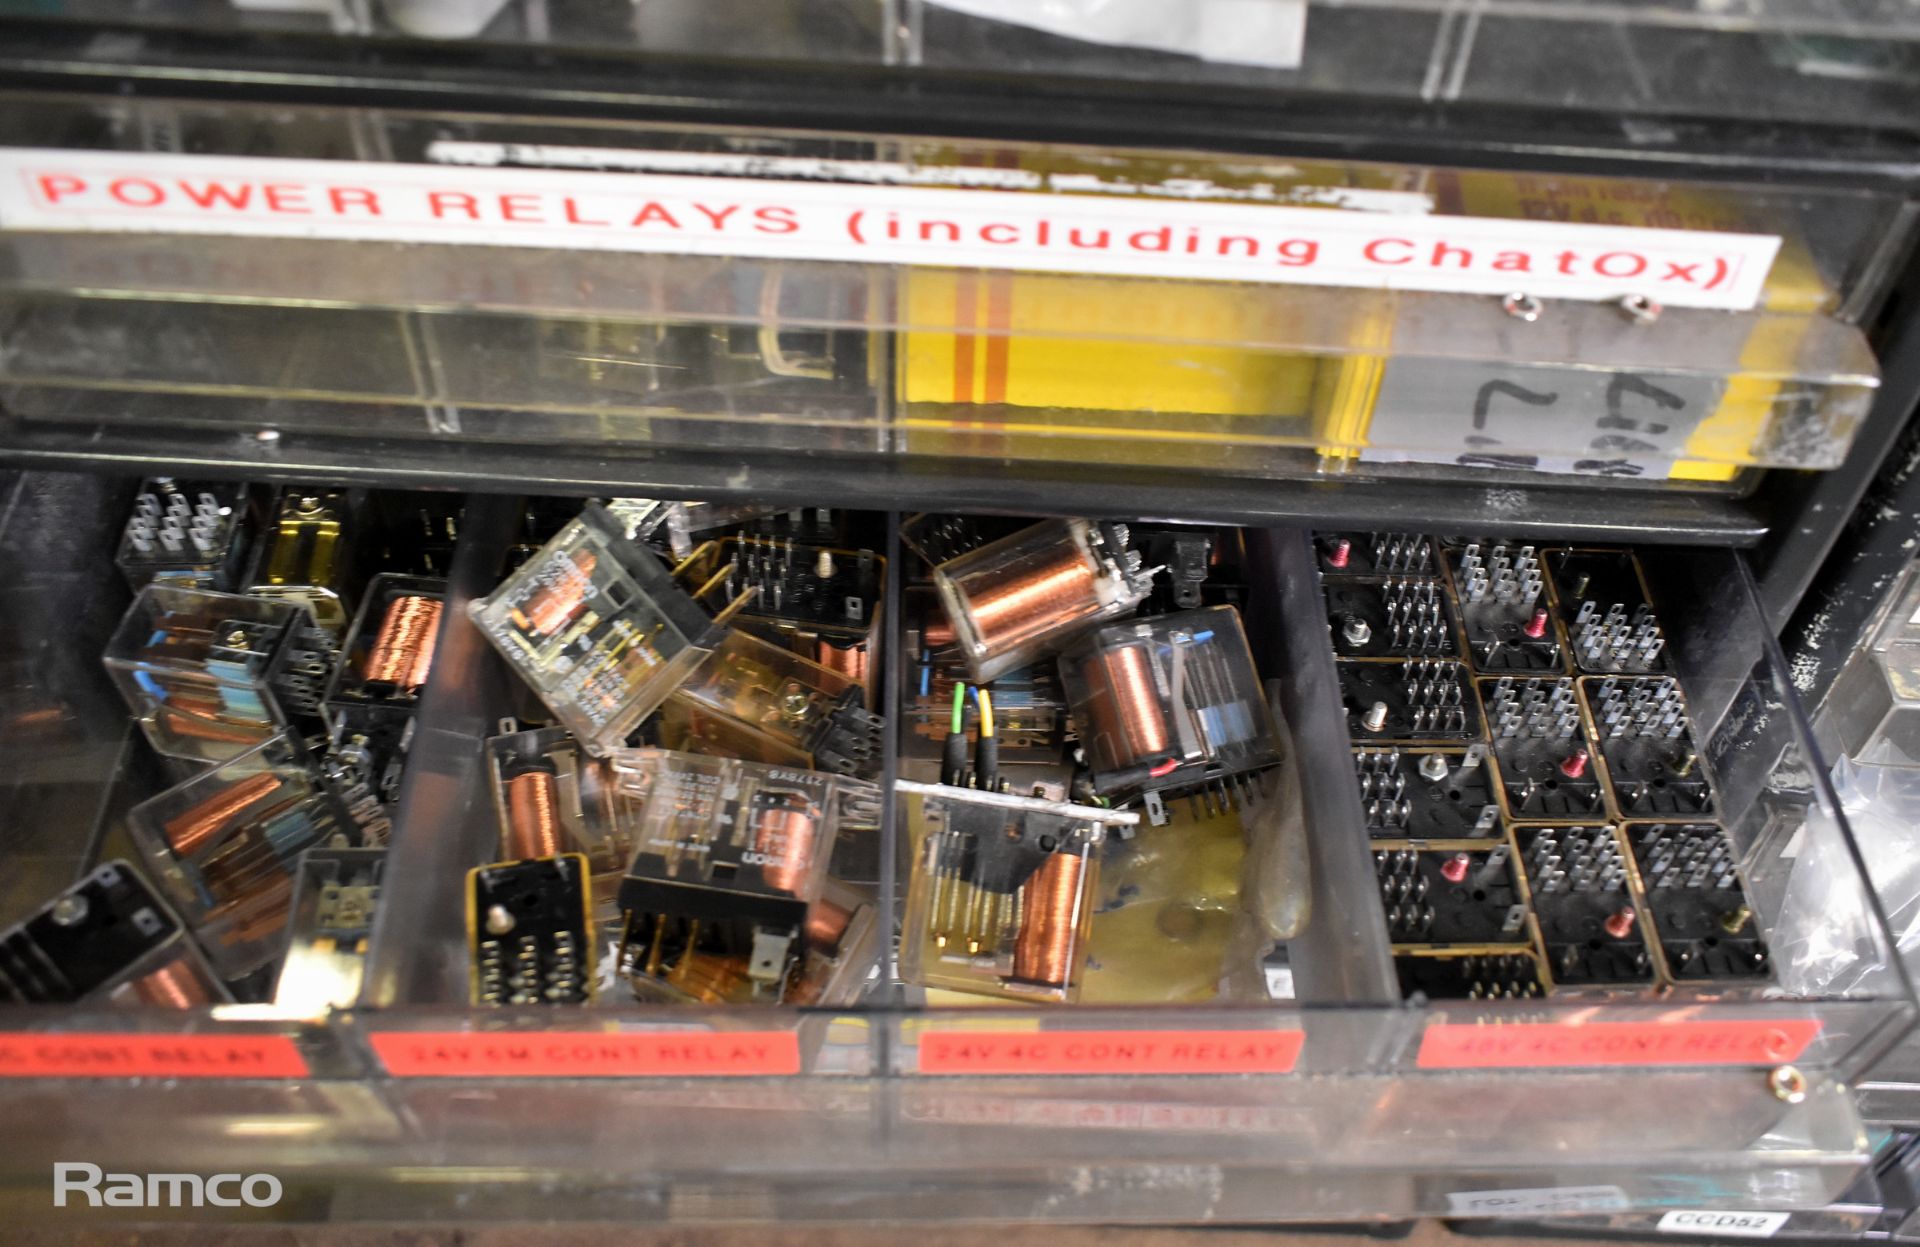 3x Raaco 6 drawer storage chest organisers - W 305 x D 160 x H 420mm, 3x Raaco 36 drawer units - Image 9 of 21